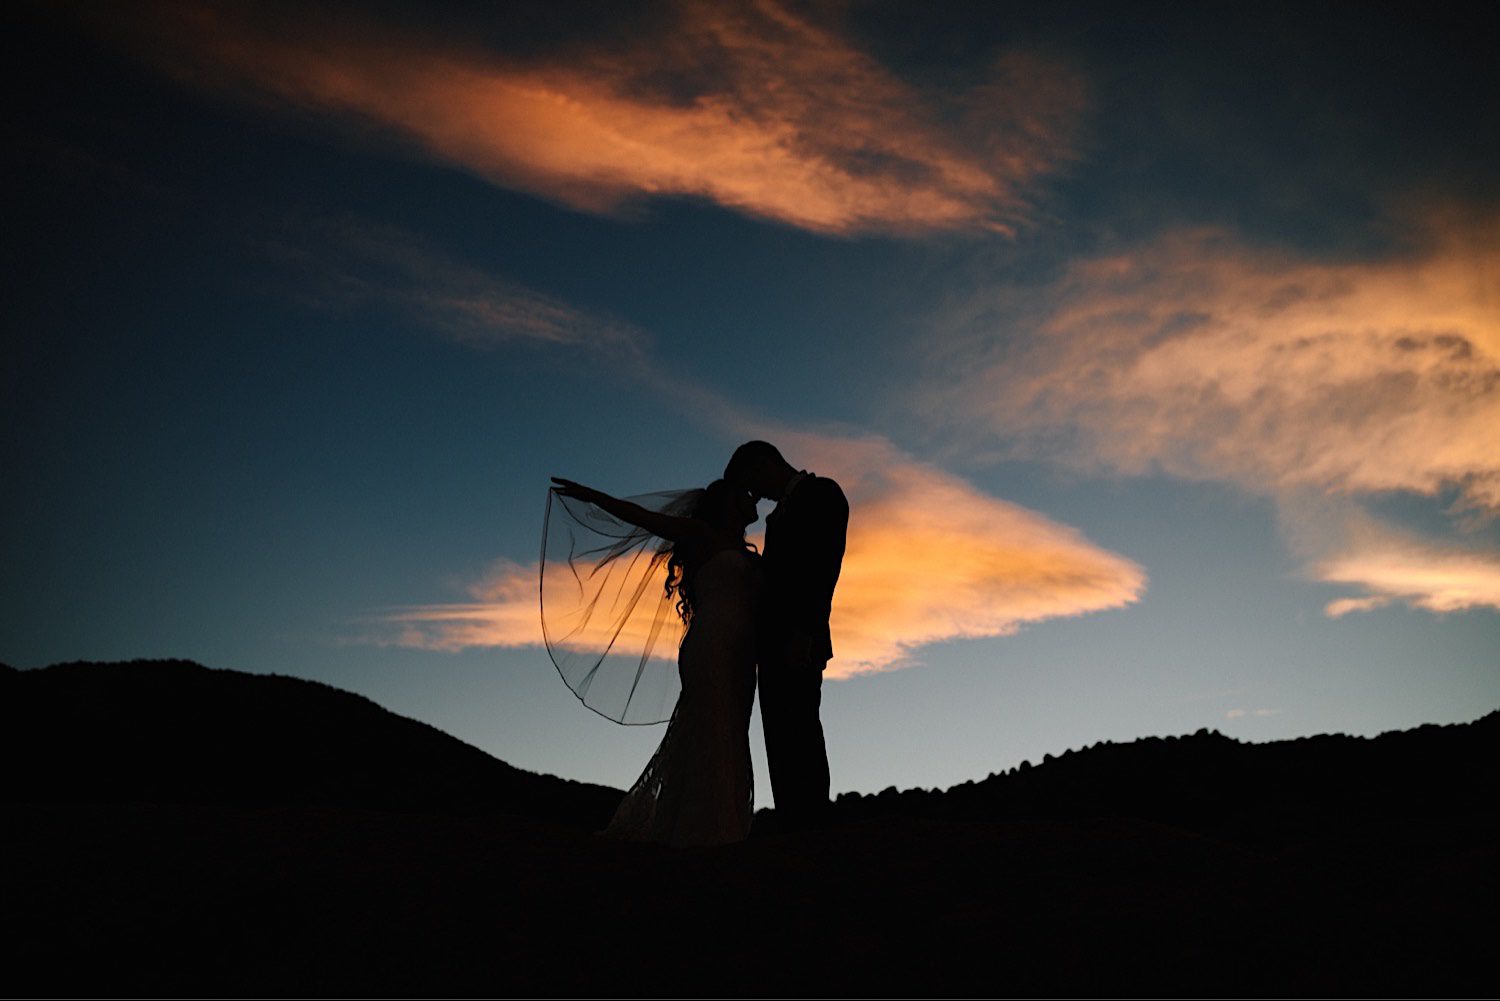 Fall Colorado Mountain Wedding at Willow Ridge Manor, Bride and groom photos, sunset wedding photos, Wedding photography in Colorado